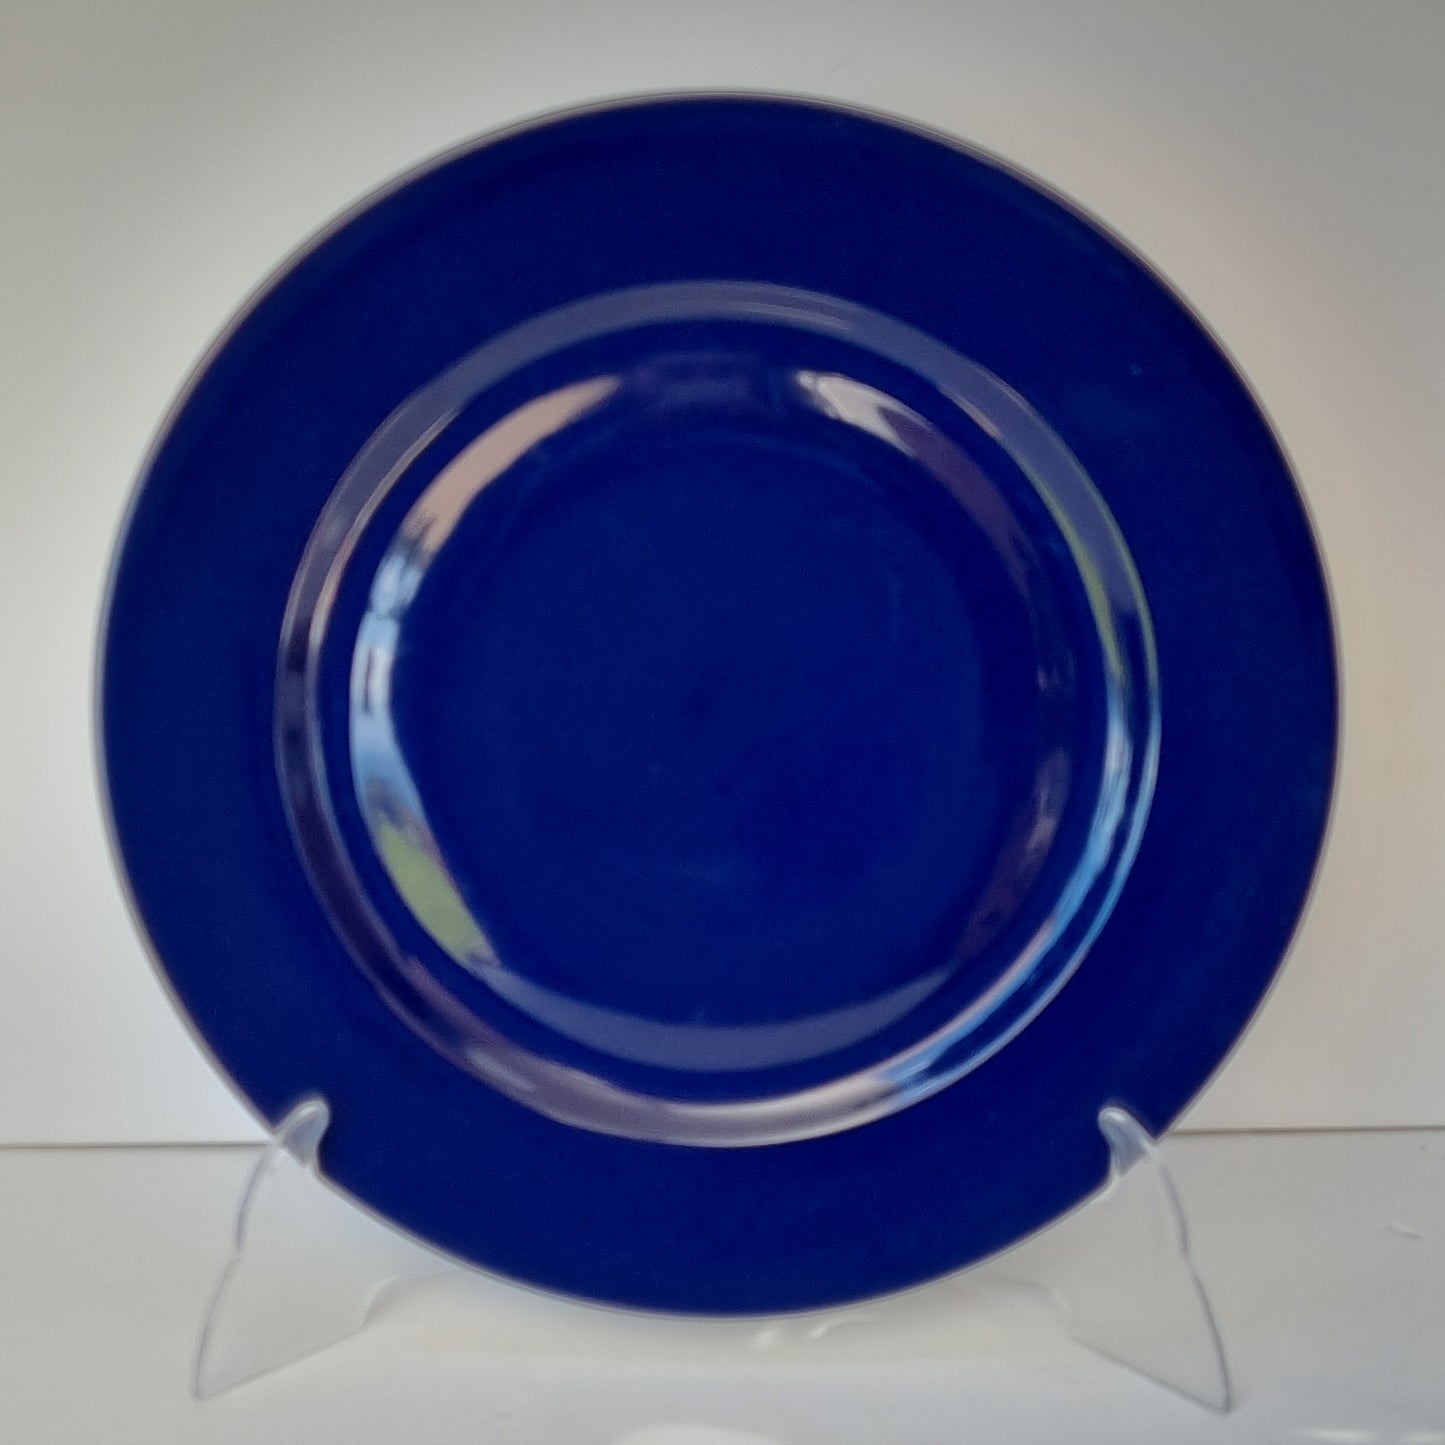 Set de 10 + 2 bajoplatos de porcelana, color azul cobalto